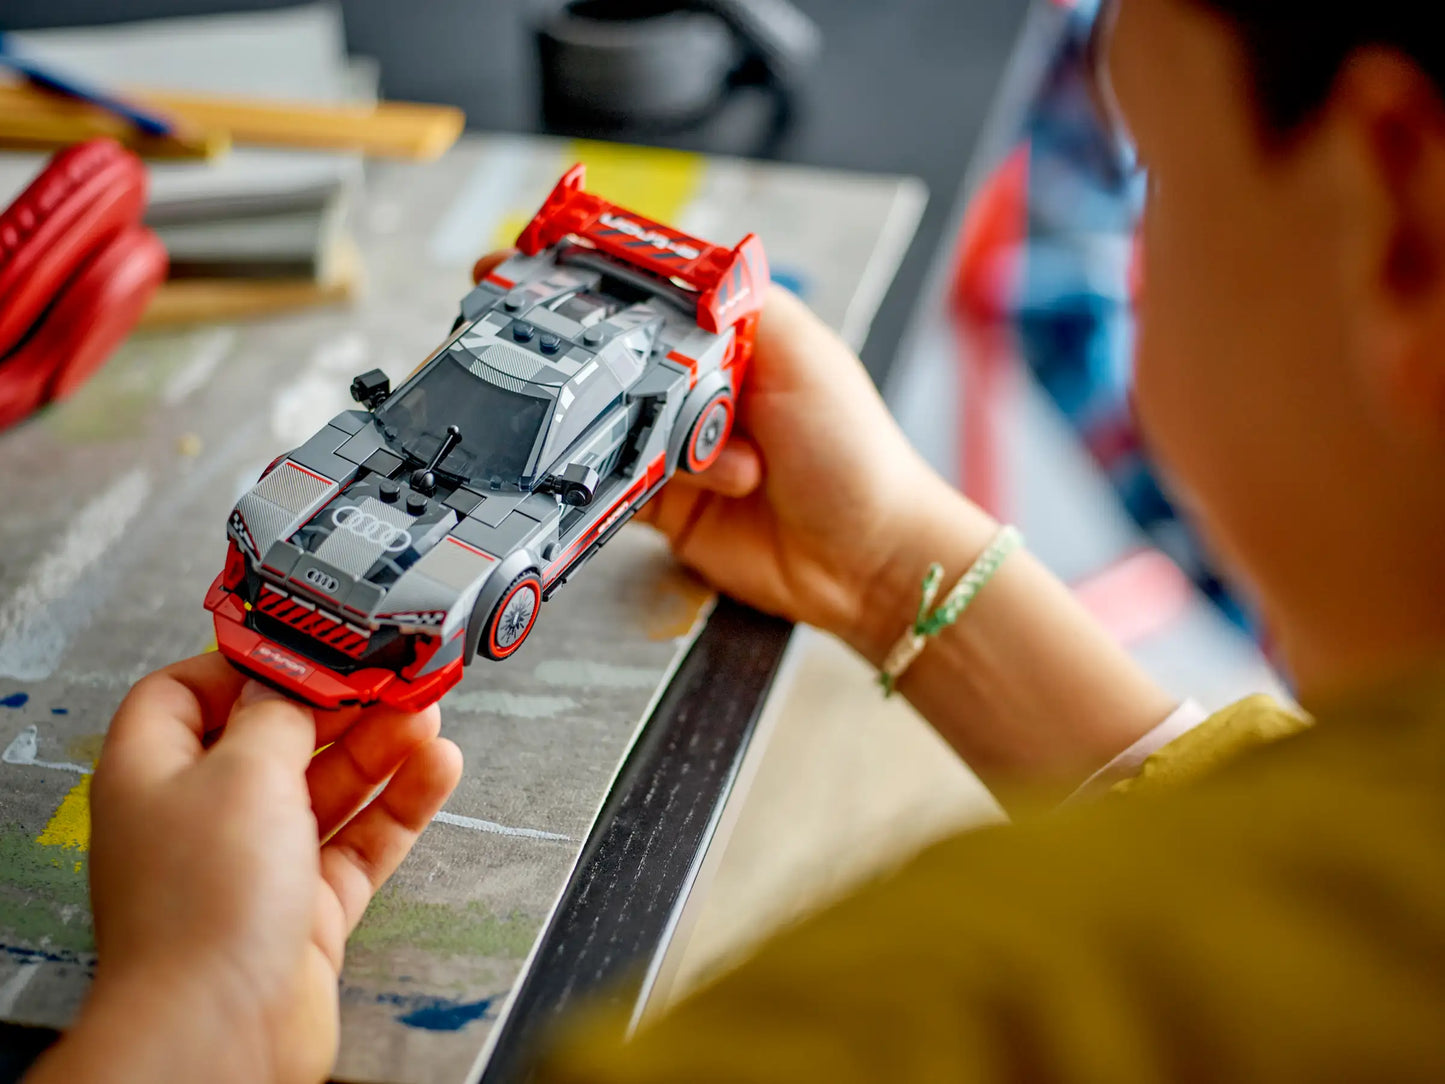 LEGO Speed Champions Audi S1 e-tron quattro